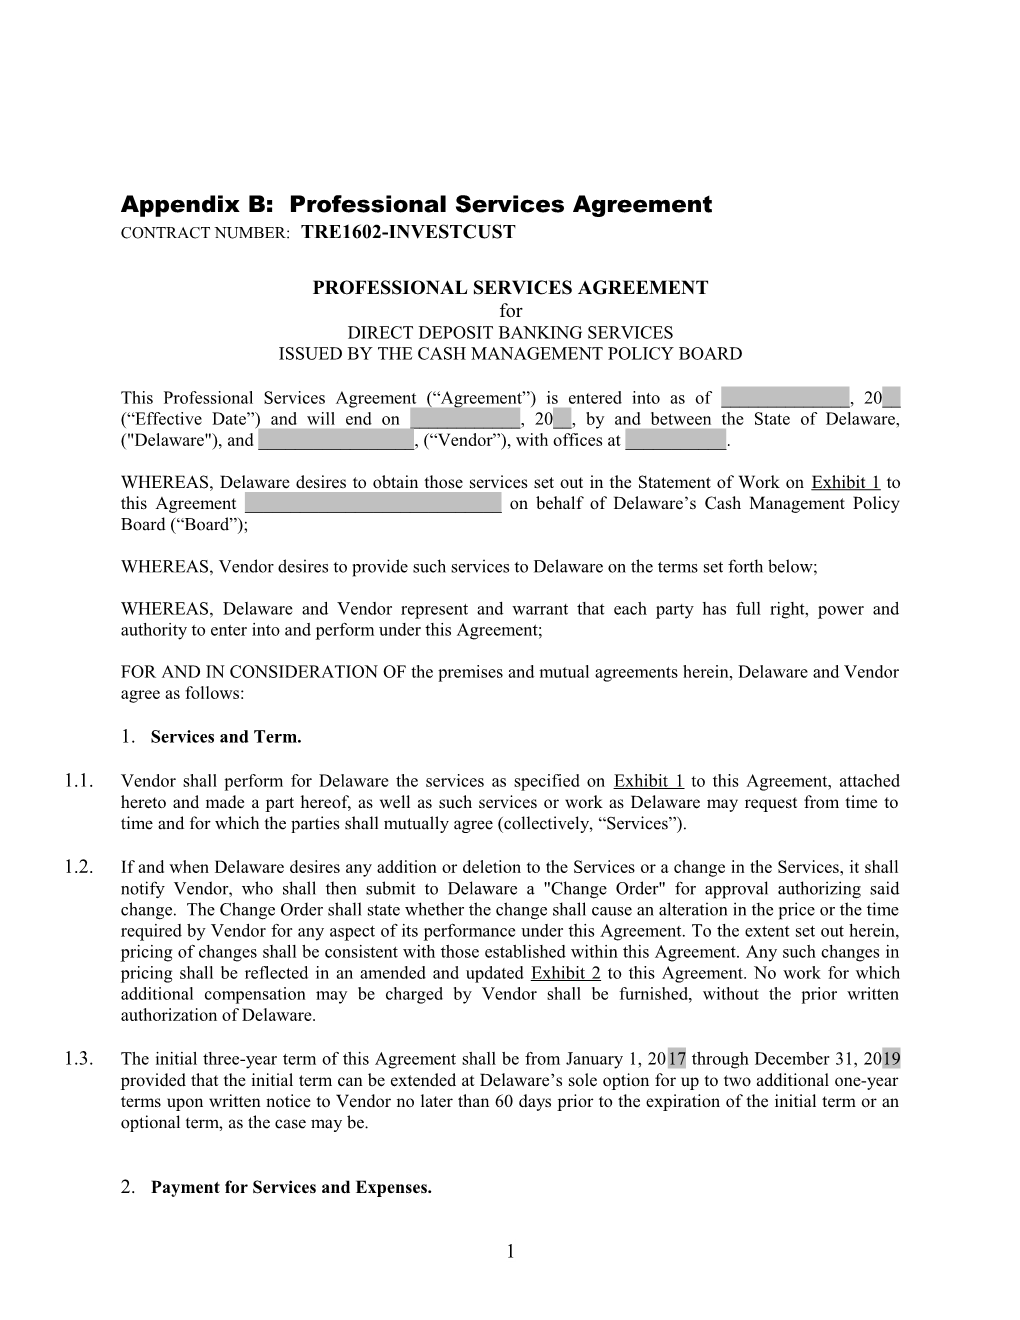 Appendixb: Professional Services Agreement